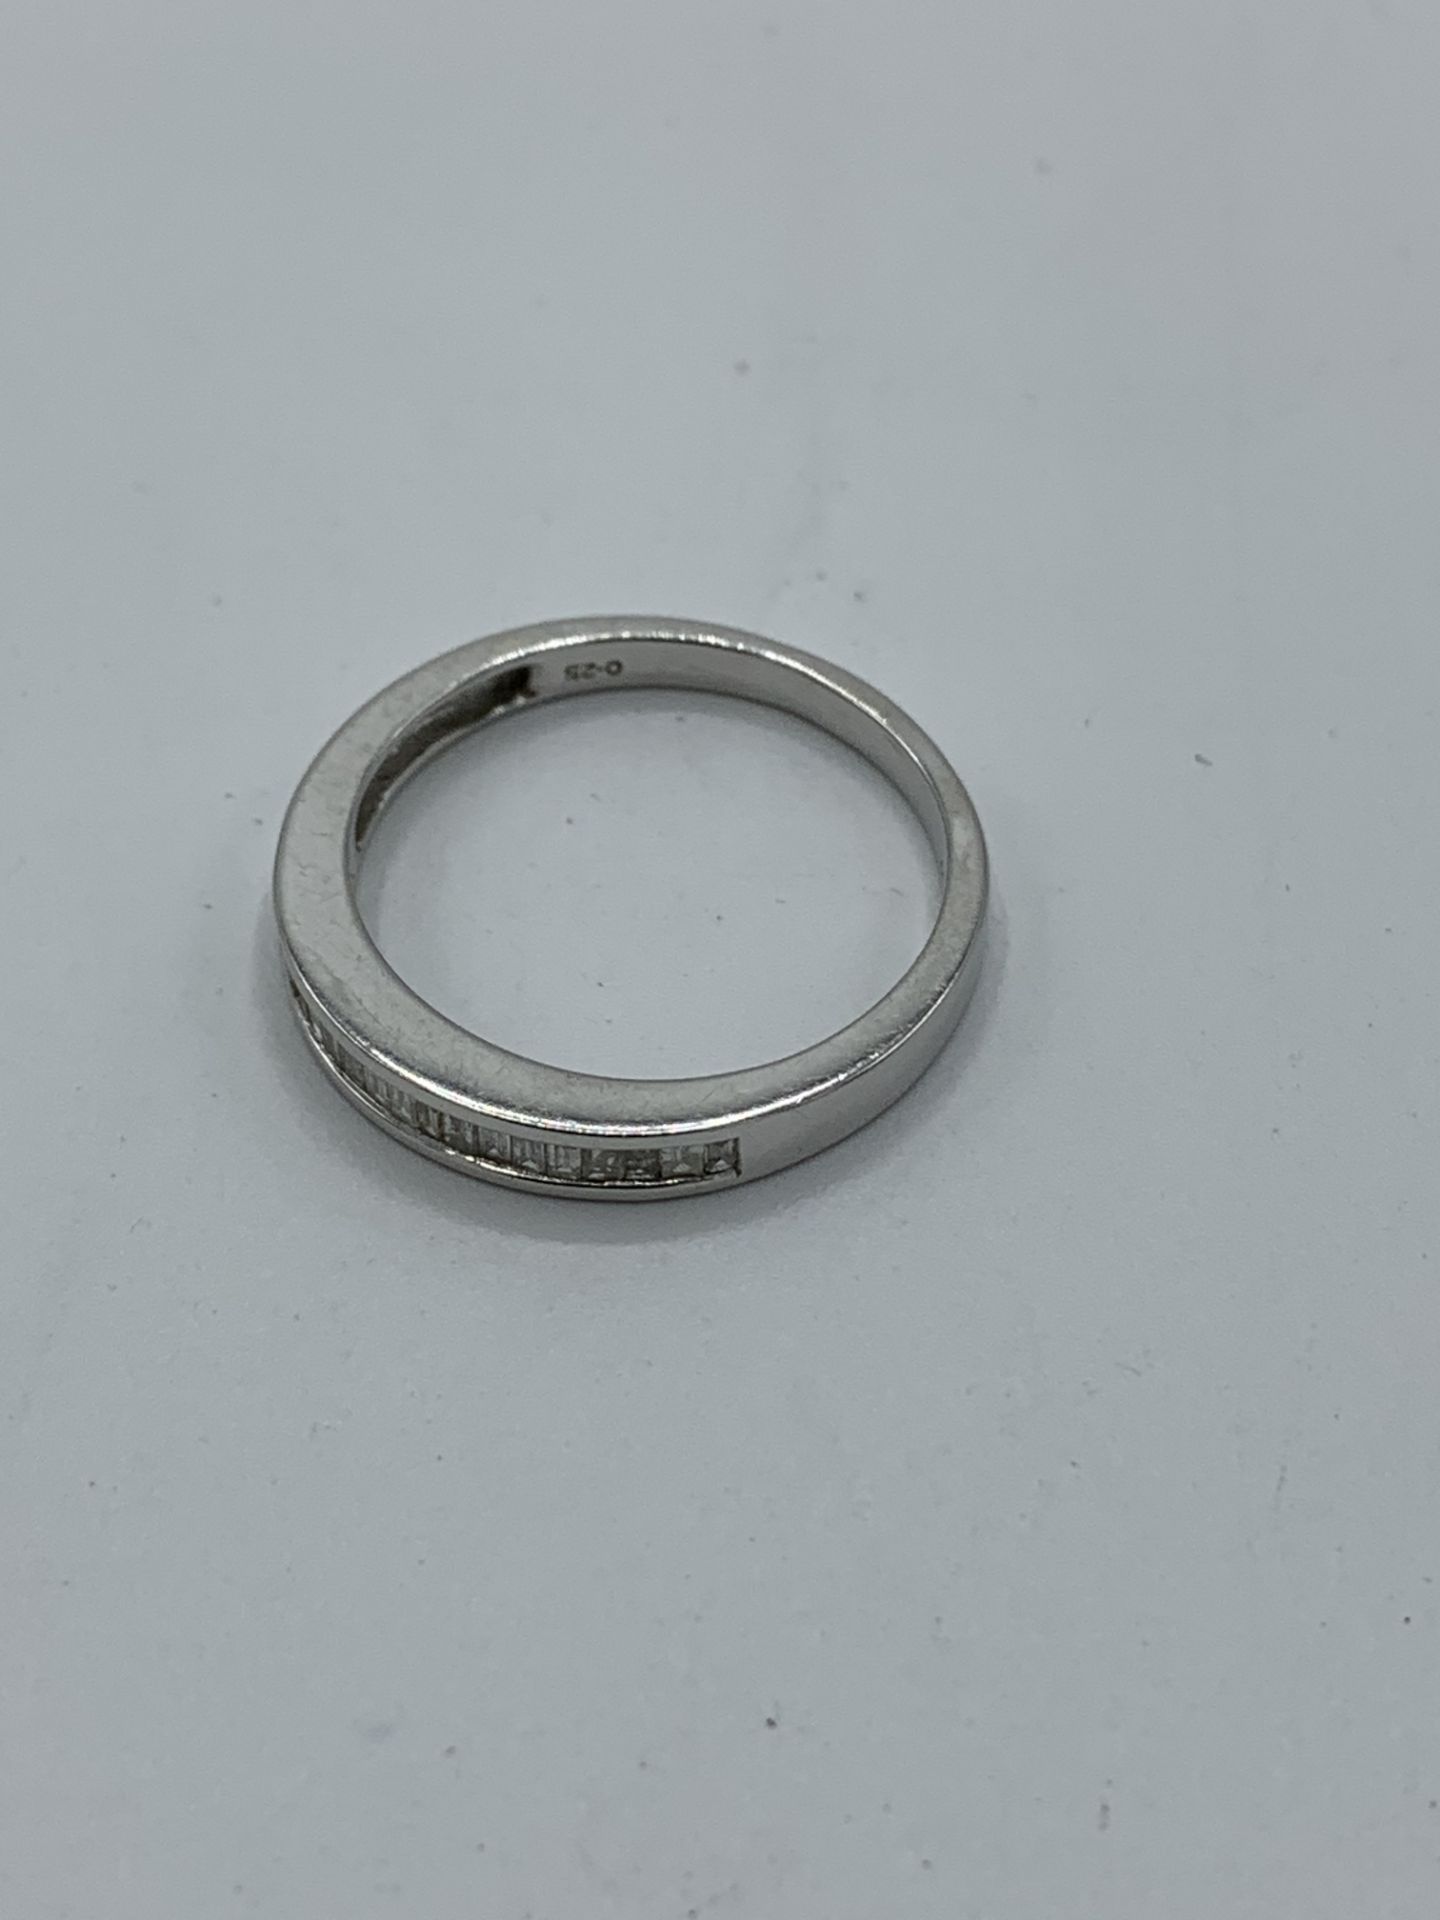 9ct white gold diamond half eternity ring, weight 2.4gm, size P 1/2. Estimate £150-180. - Image 2 of 2